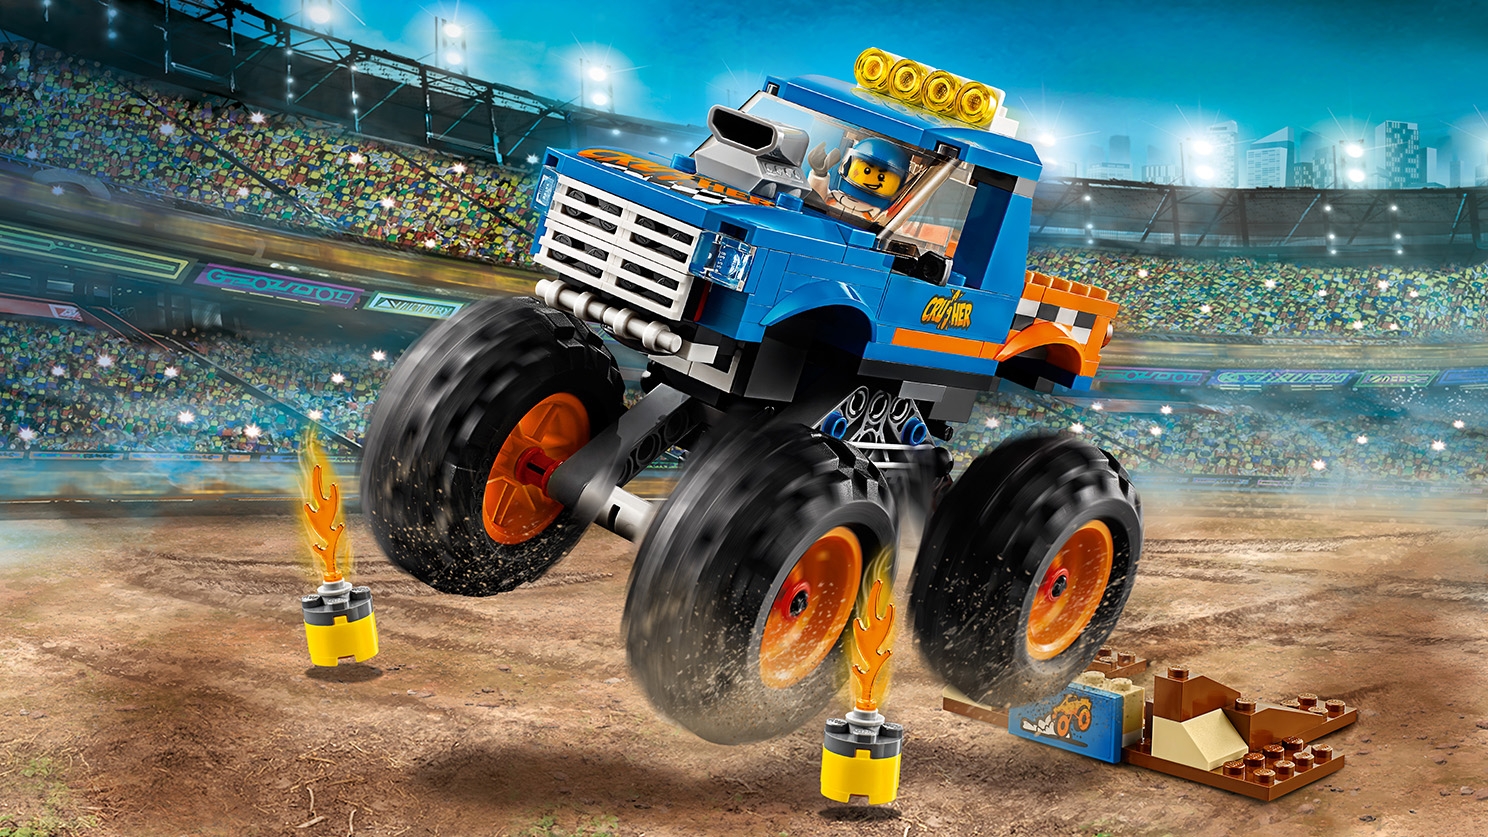 Monster Truck - LEGO® City Sets - LEGO.com for kids